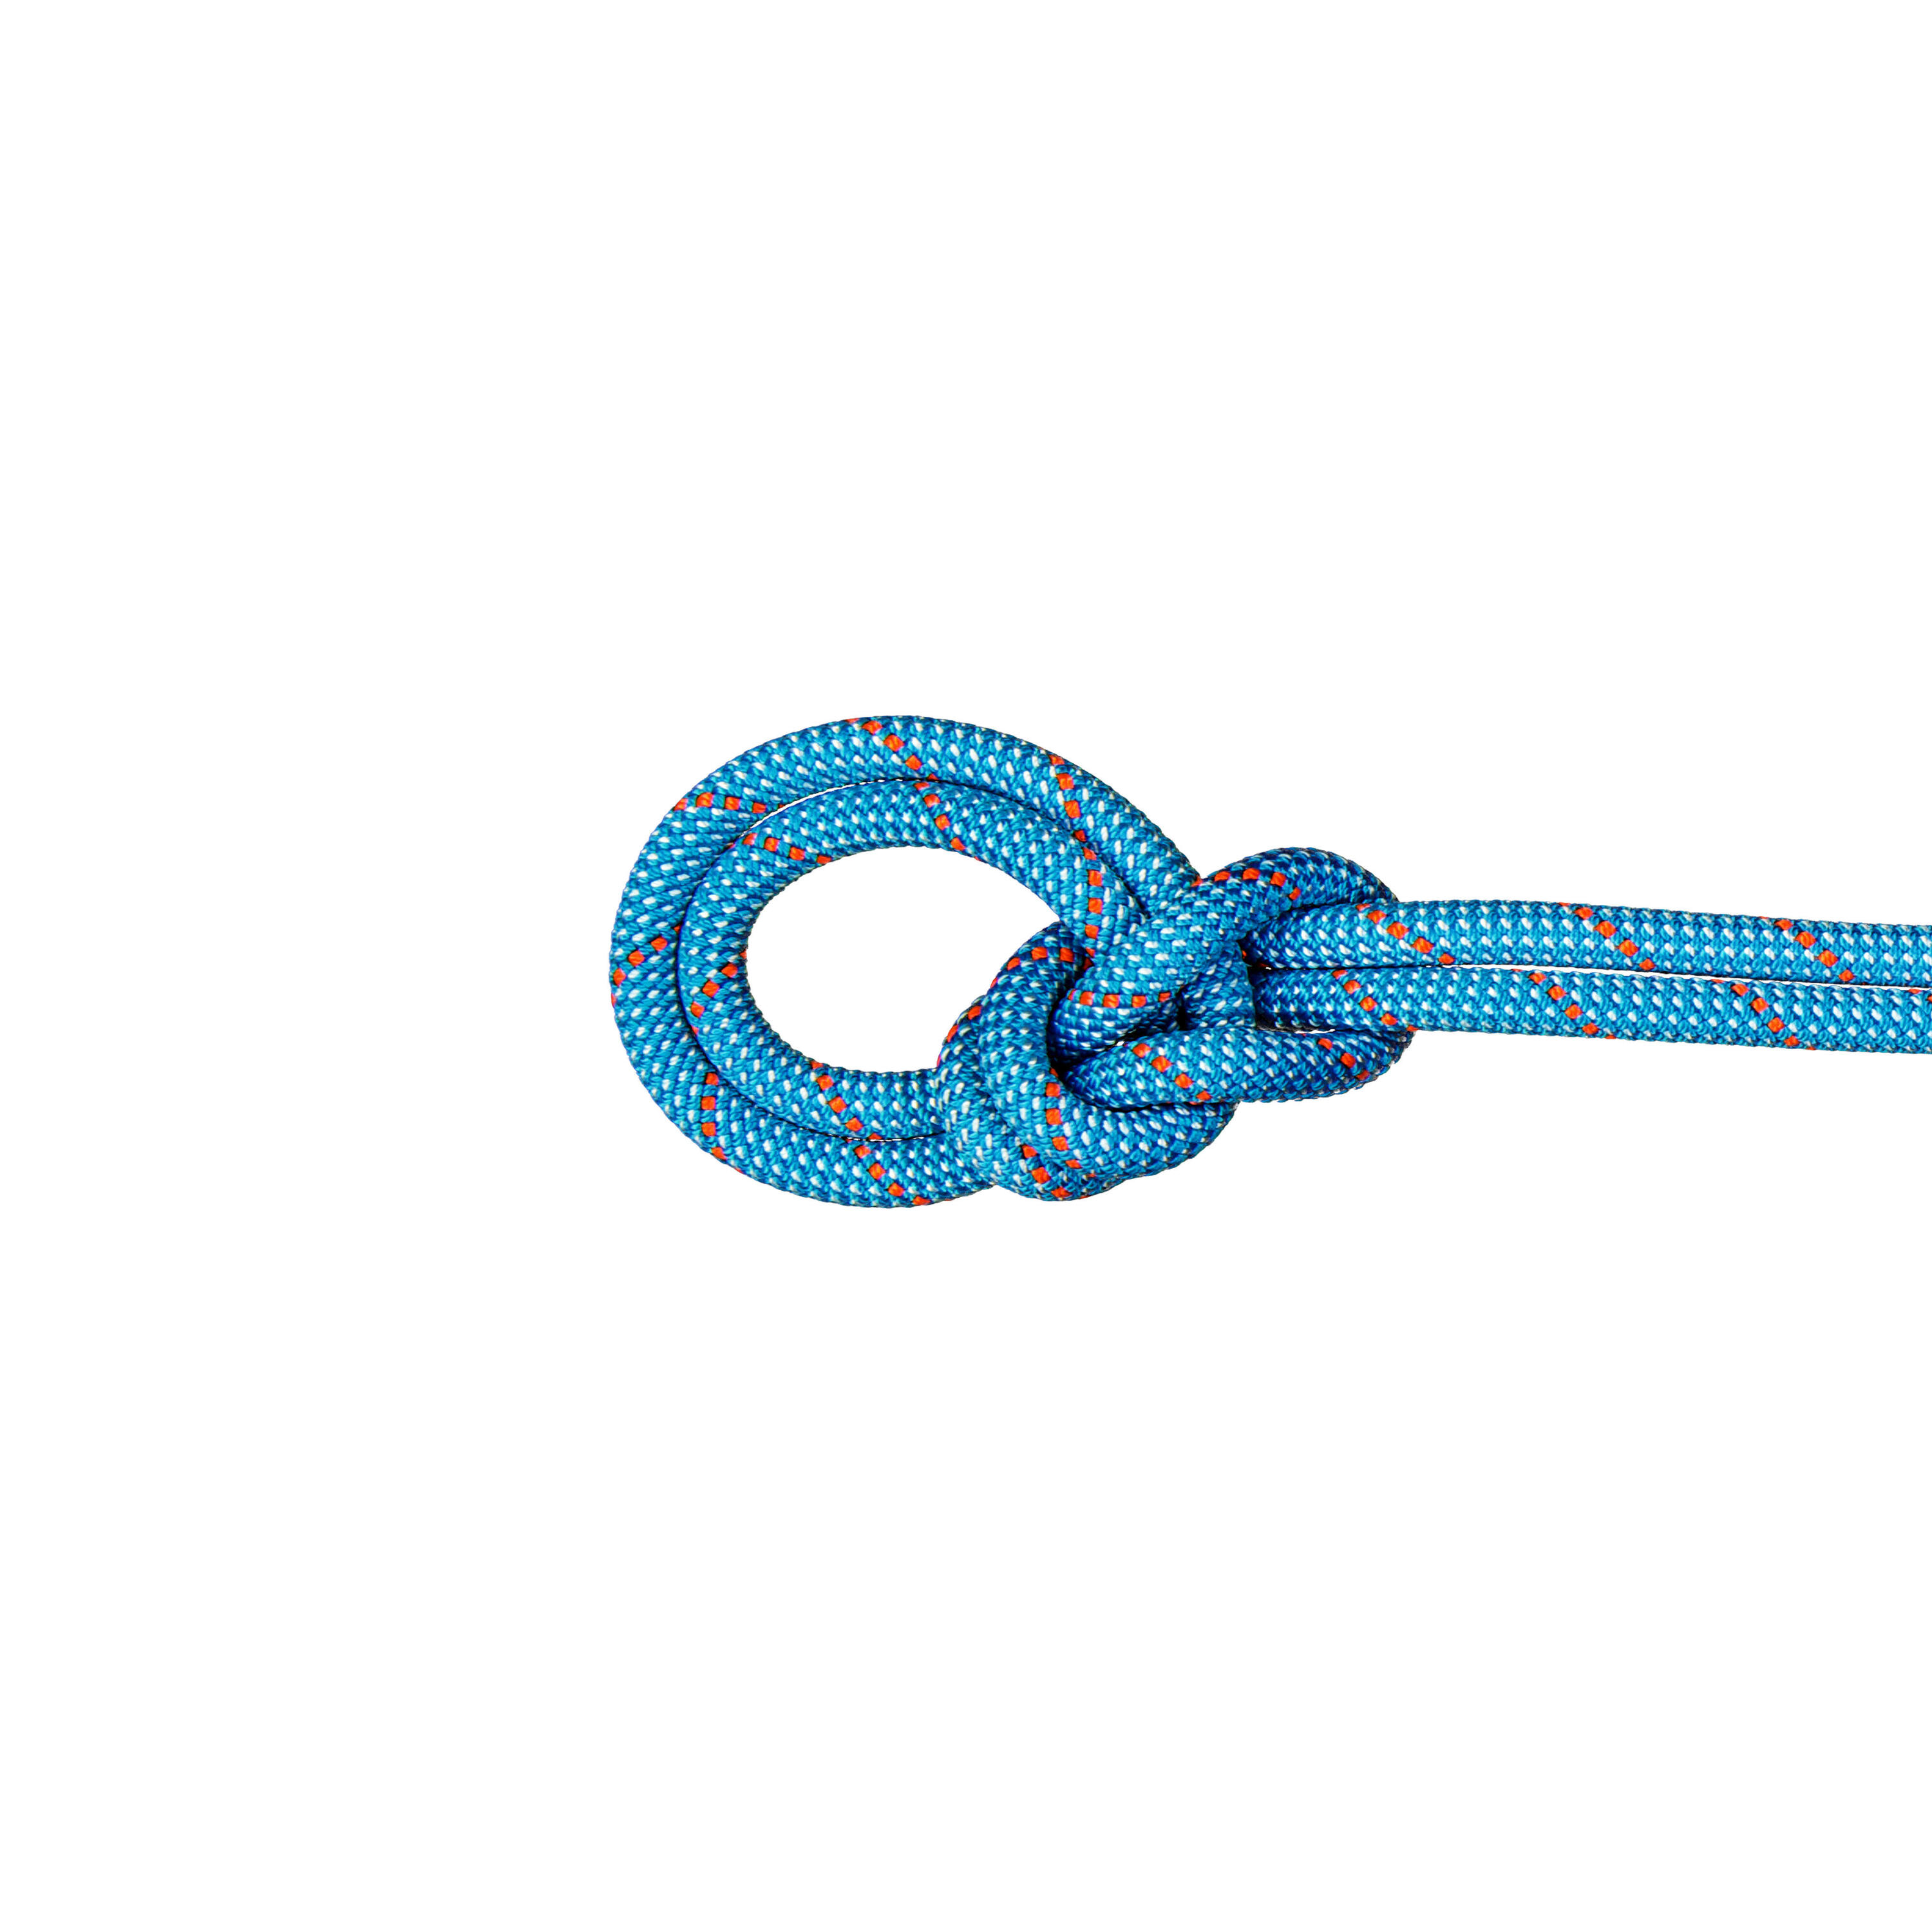 MAMMUT Crag Classic Single Rope 9.8 mm x 60m - Blue